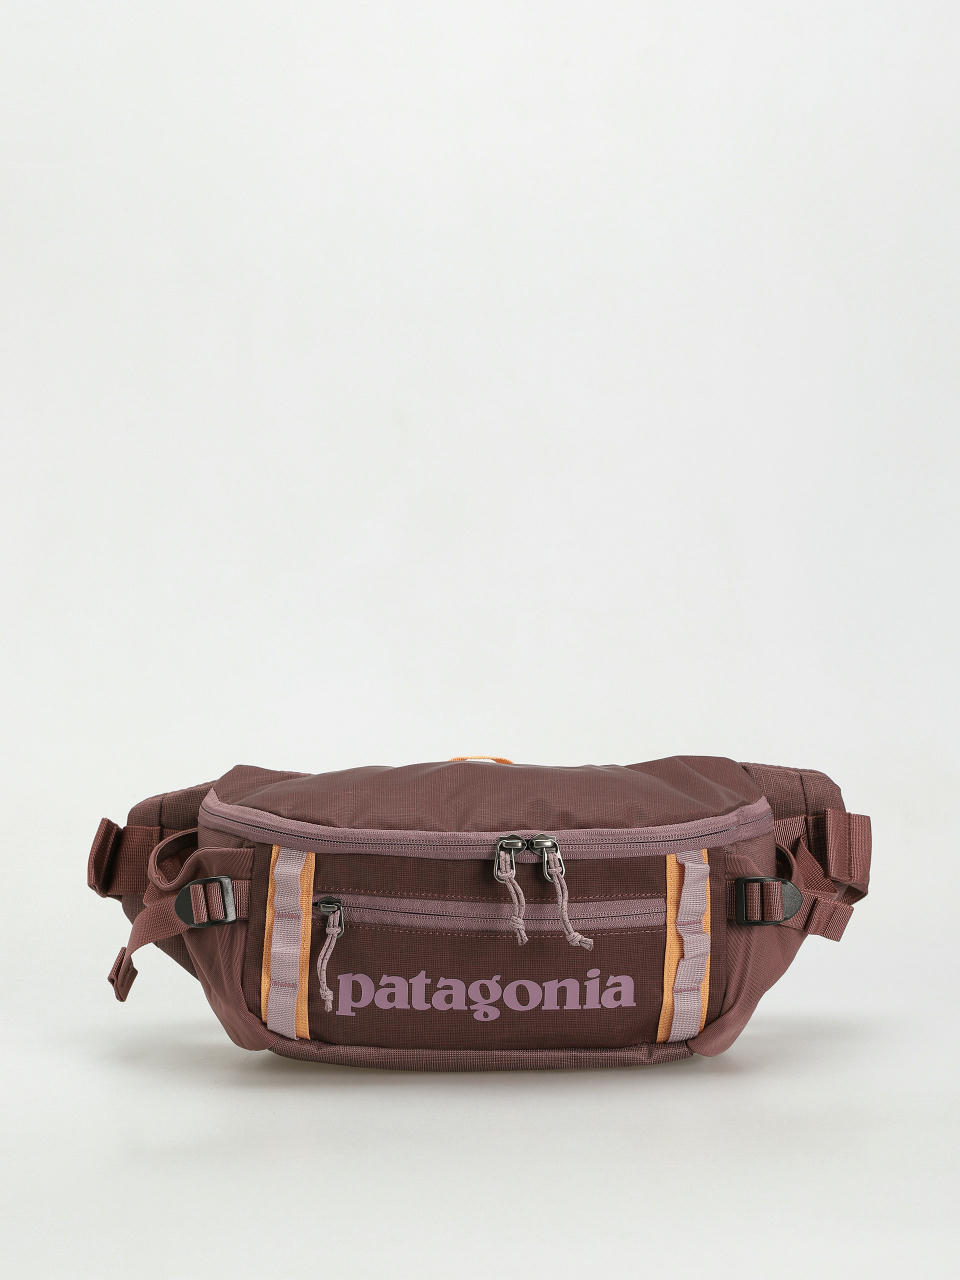 Patagonia Bum bag Black Hole Waist Pack 5L (dulse mauve)